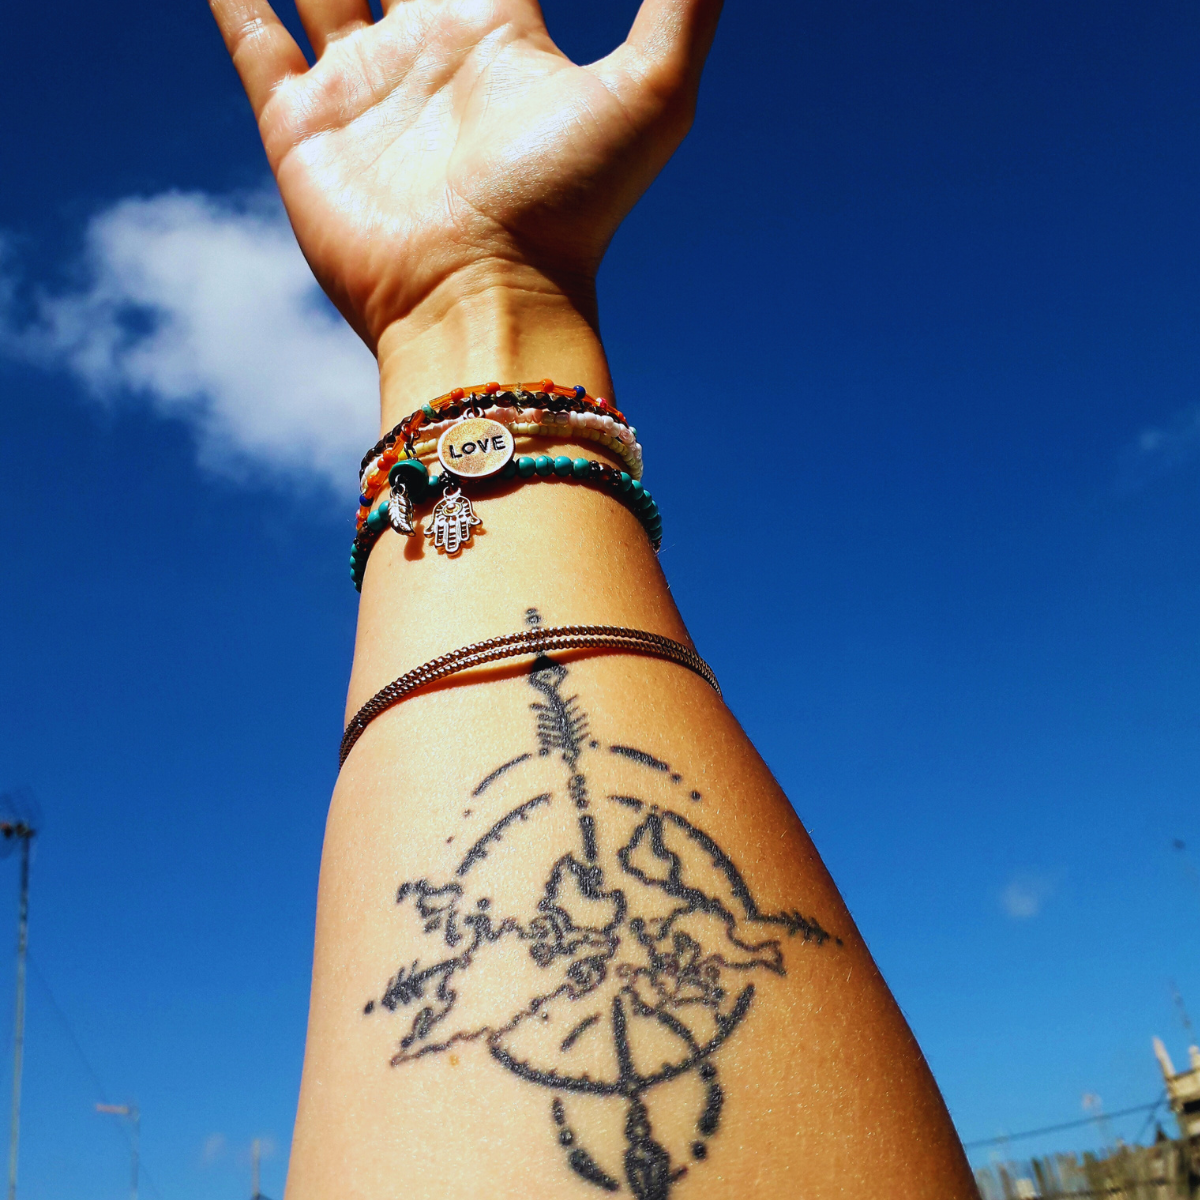 Arm with worldmap tattoo